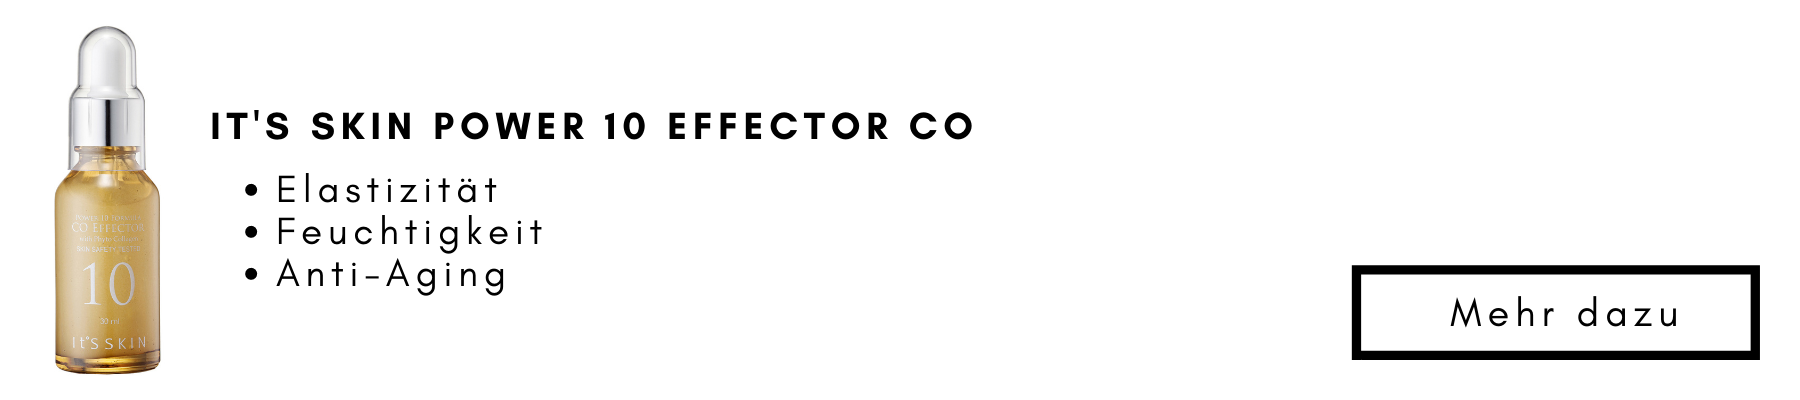 CO-Effector-Bild